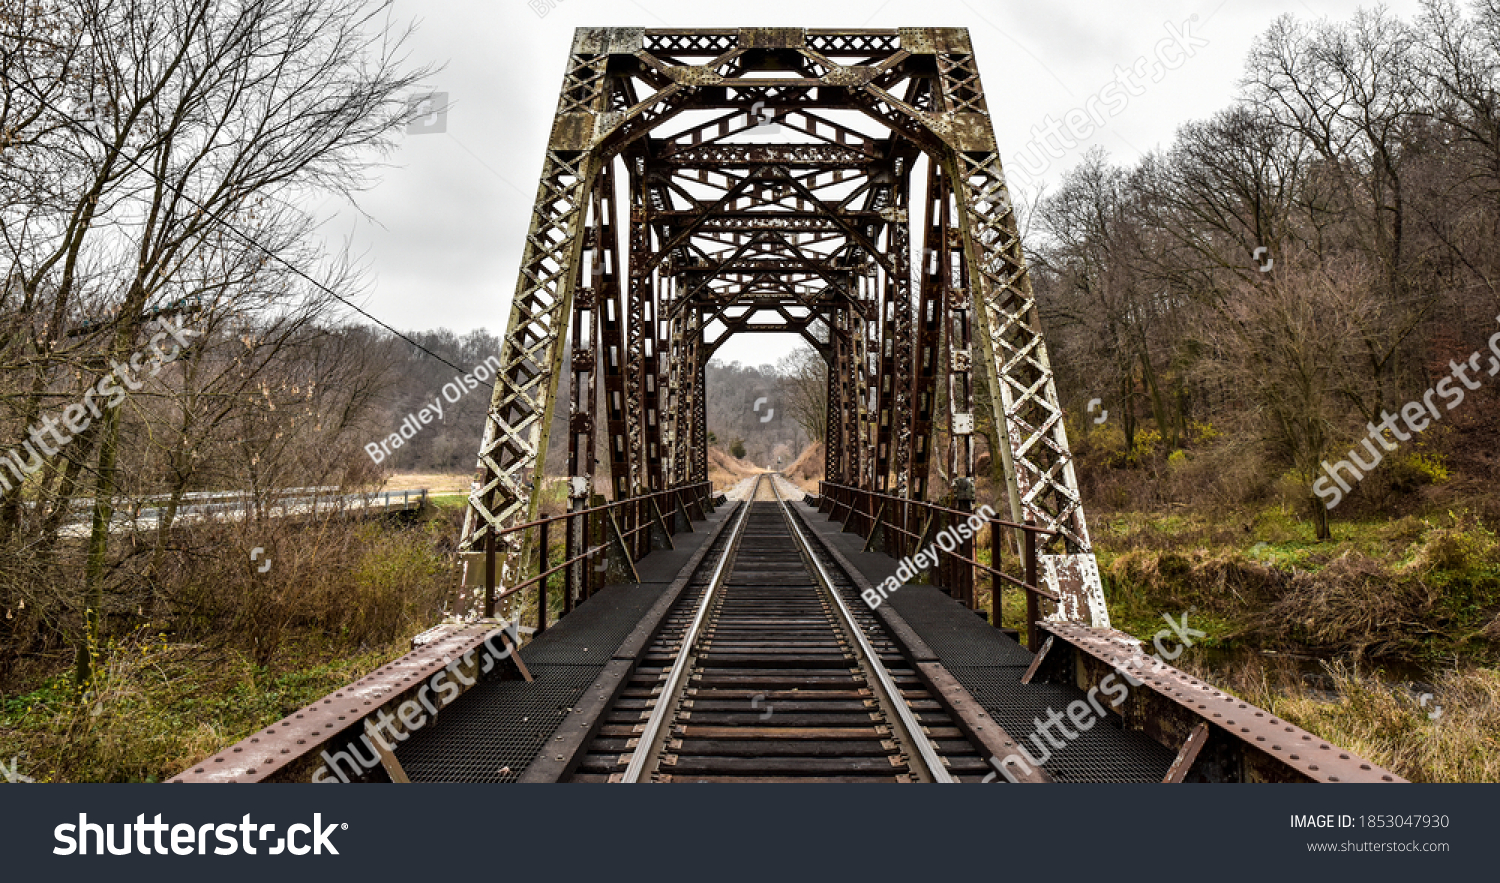 Railroad On Bridge Images Stock Photos Vectors Shutterstock